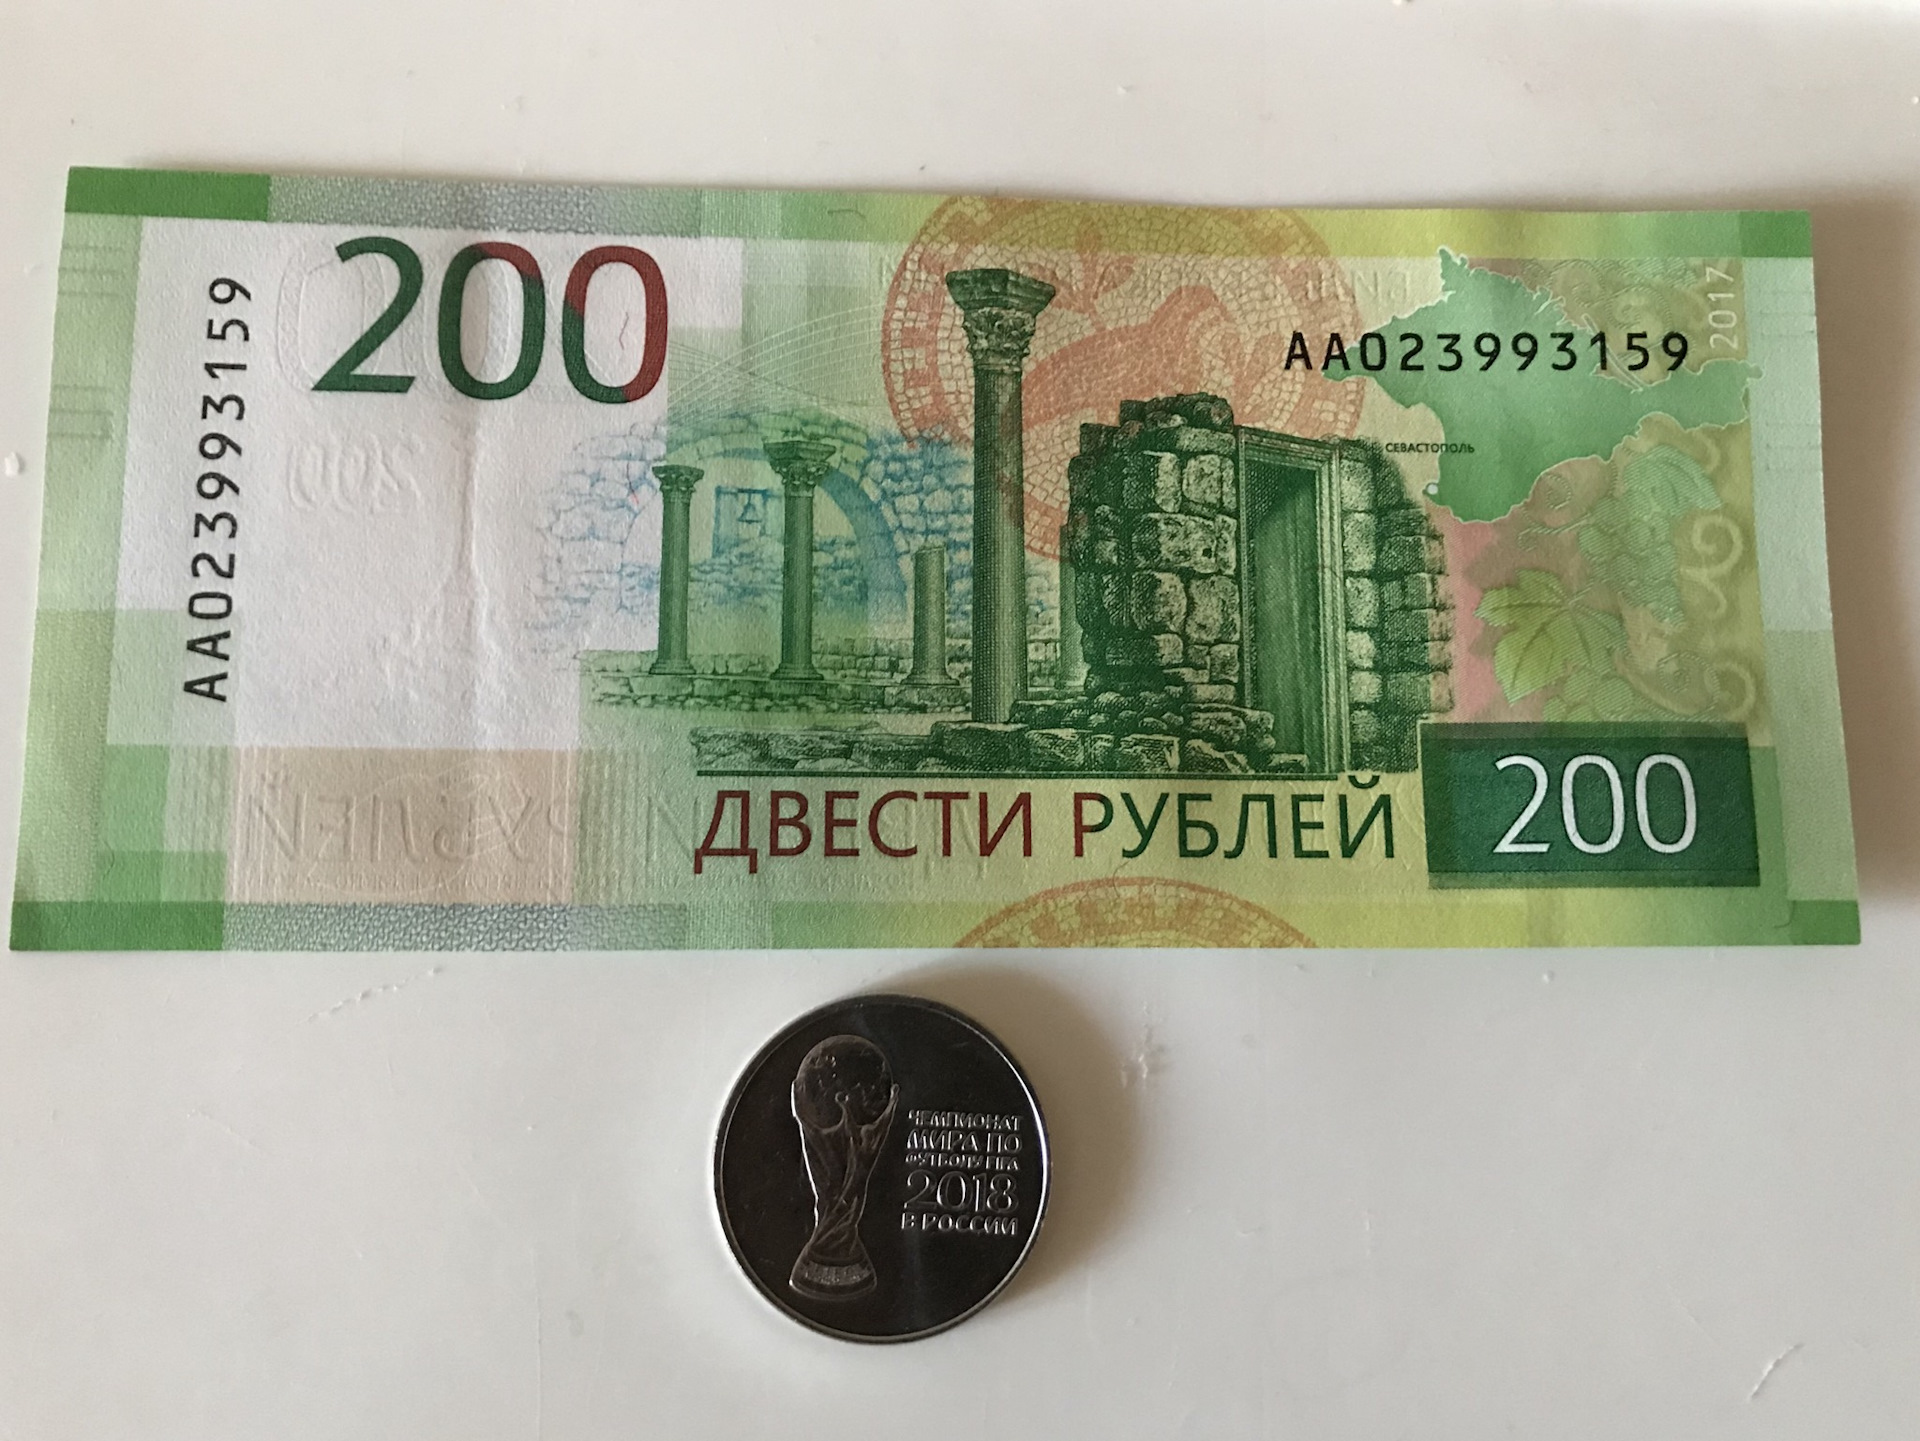 170 200 рублей. 200 Рублей. 200 Рублей юбилейные. Двести рублей юбилейные. Памятные 200 руб.